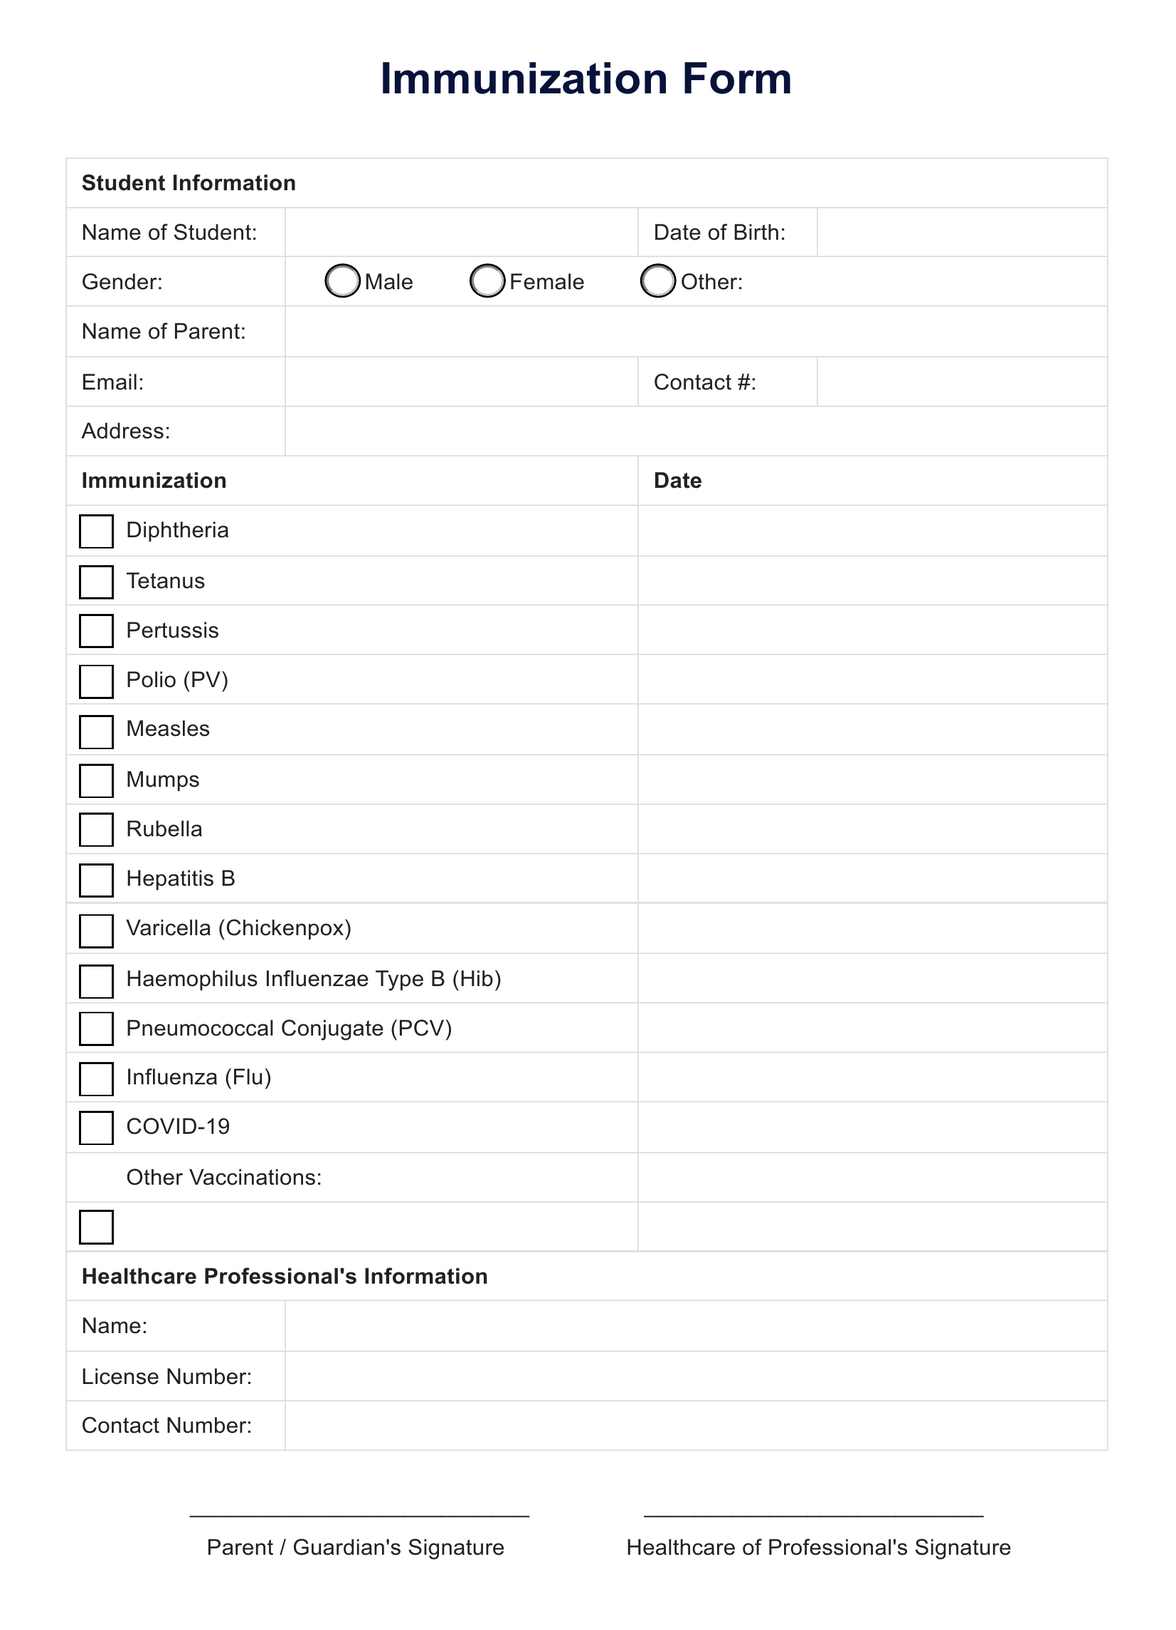 Immunization Form PDF Example